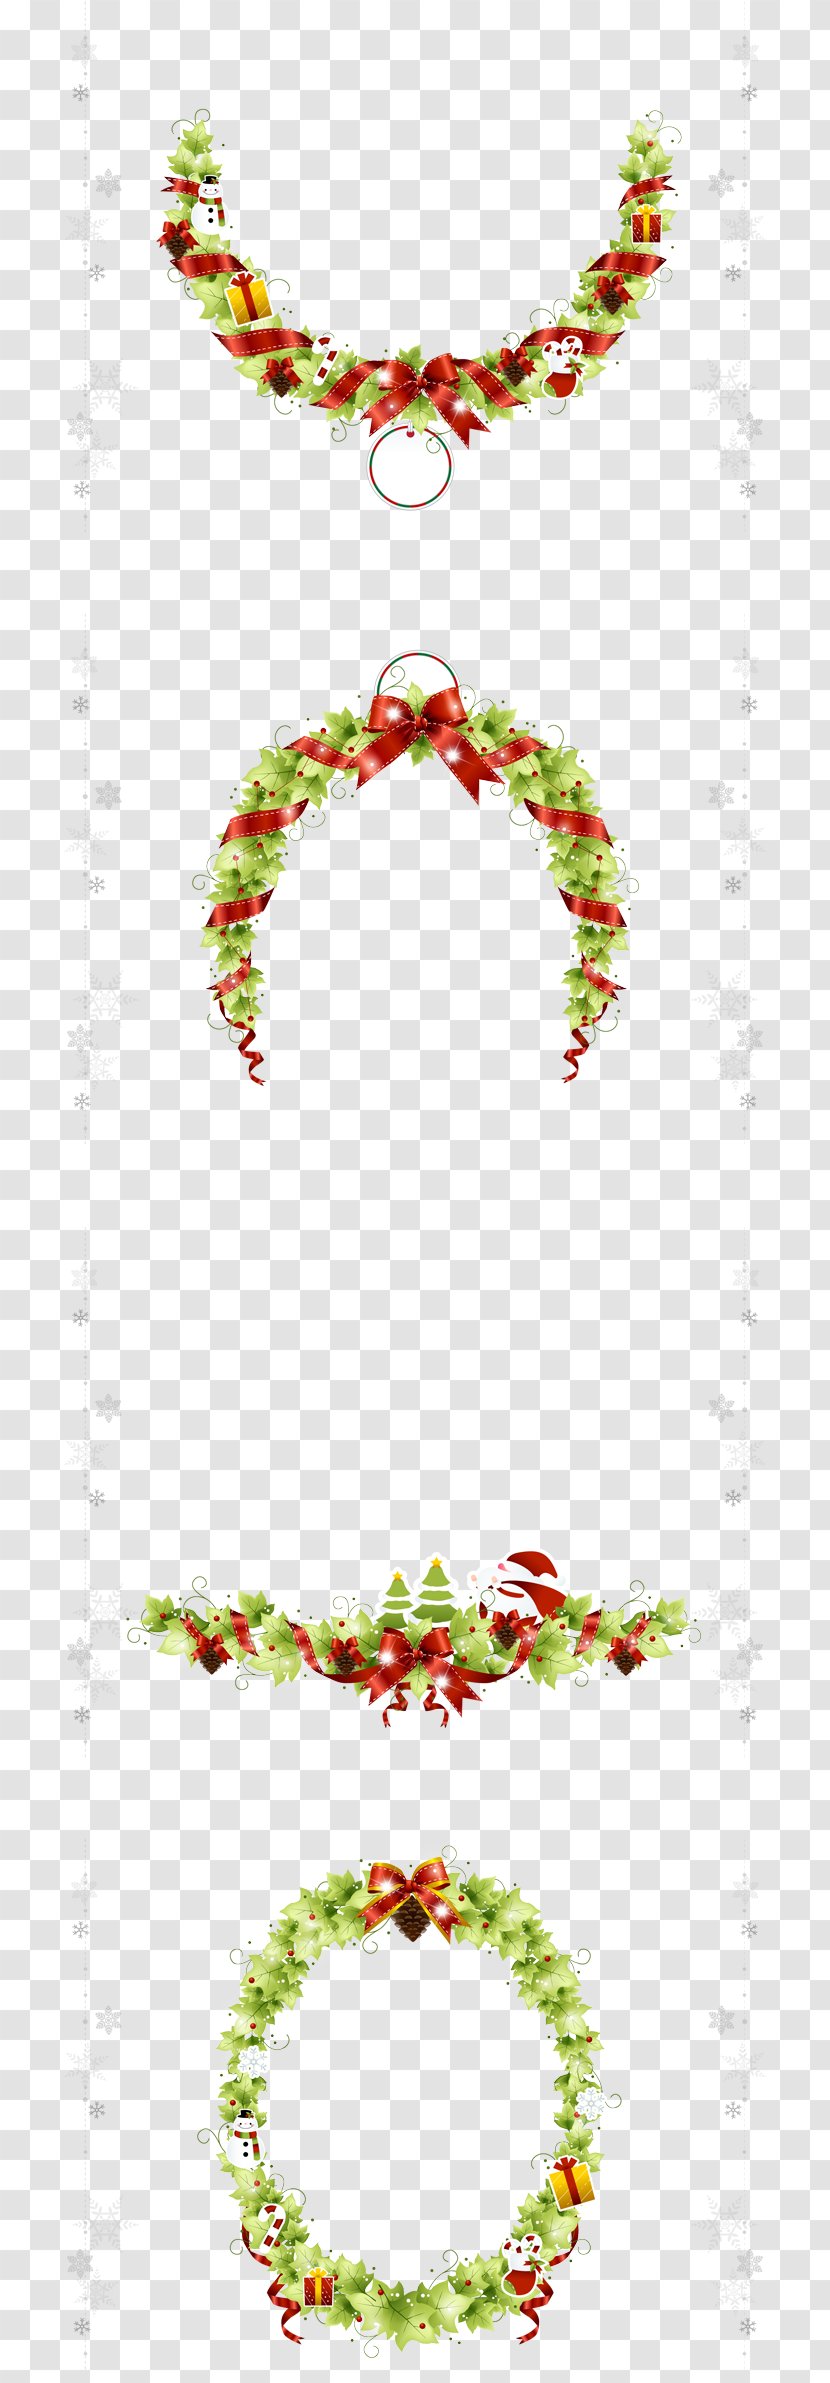 Christmas Santa Claus Wreath Clip Art - Decoration Ring The Third Group Transparent PNG